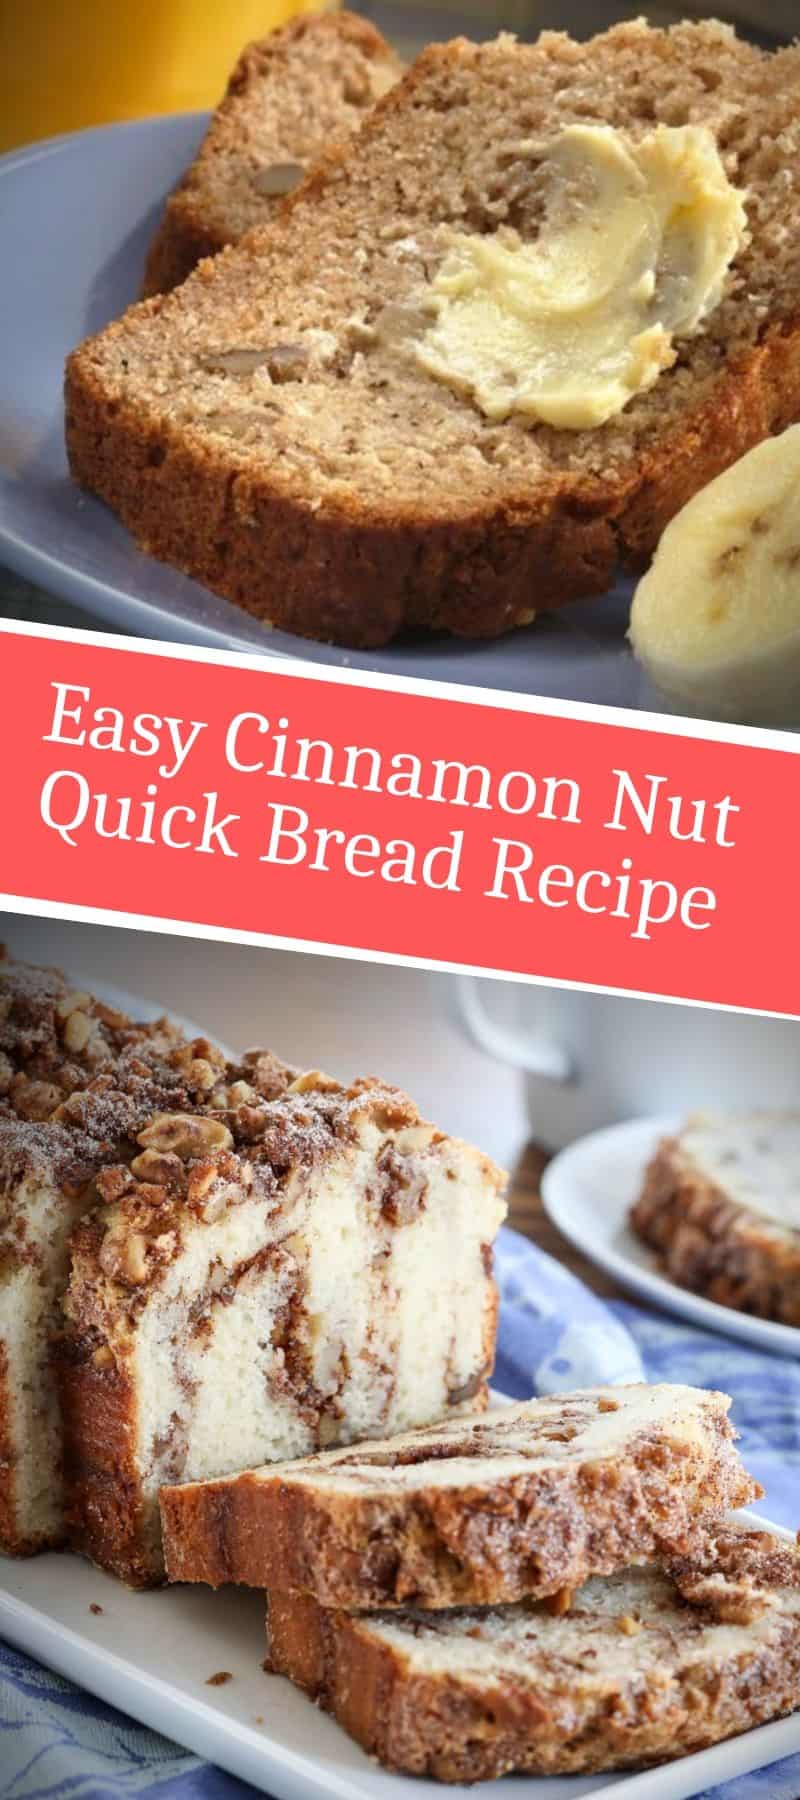 Easy Cinnamon Nut Quick Bread Recipe 3